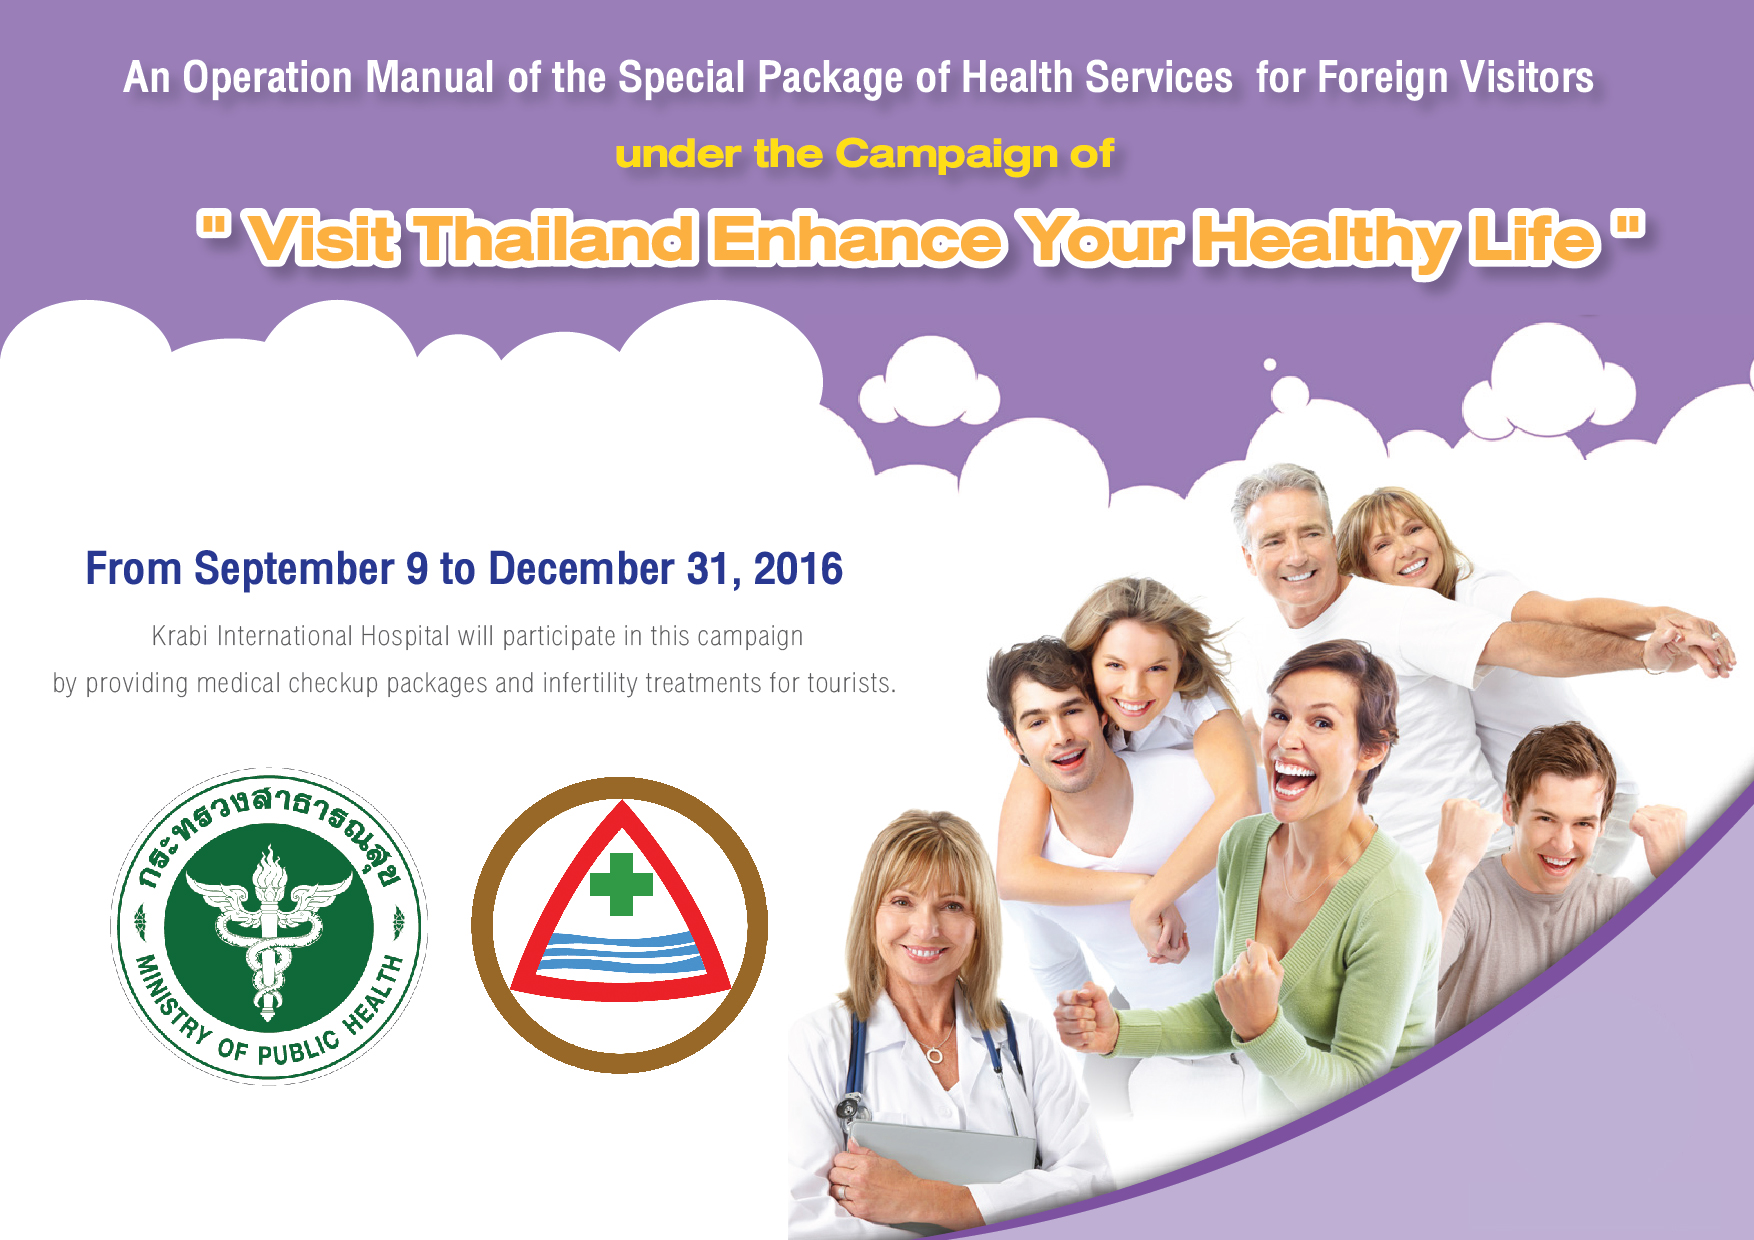 visit-thailand-enhance-your-health-life-01